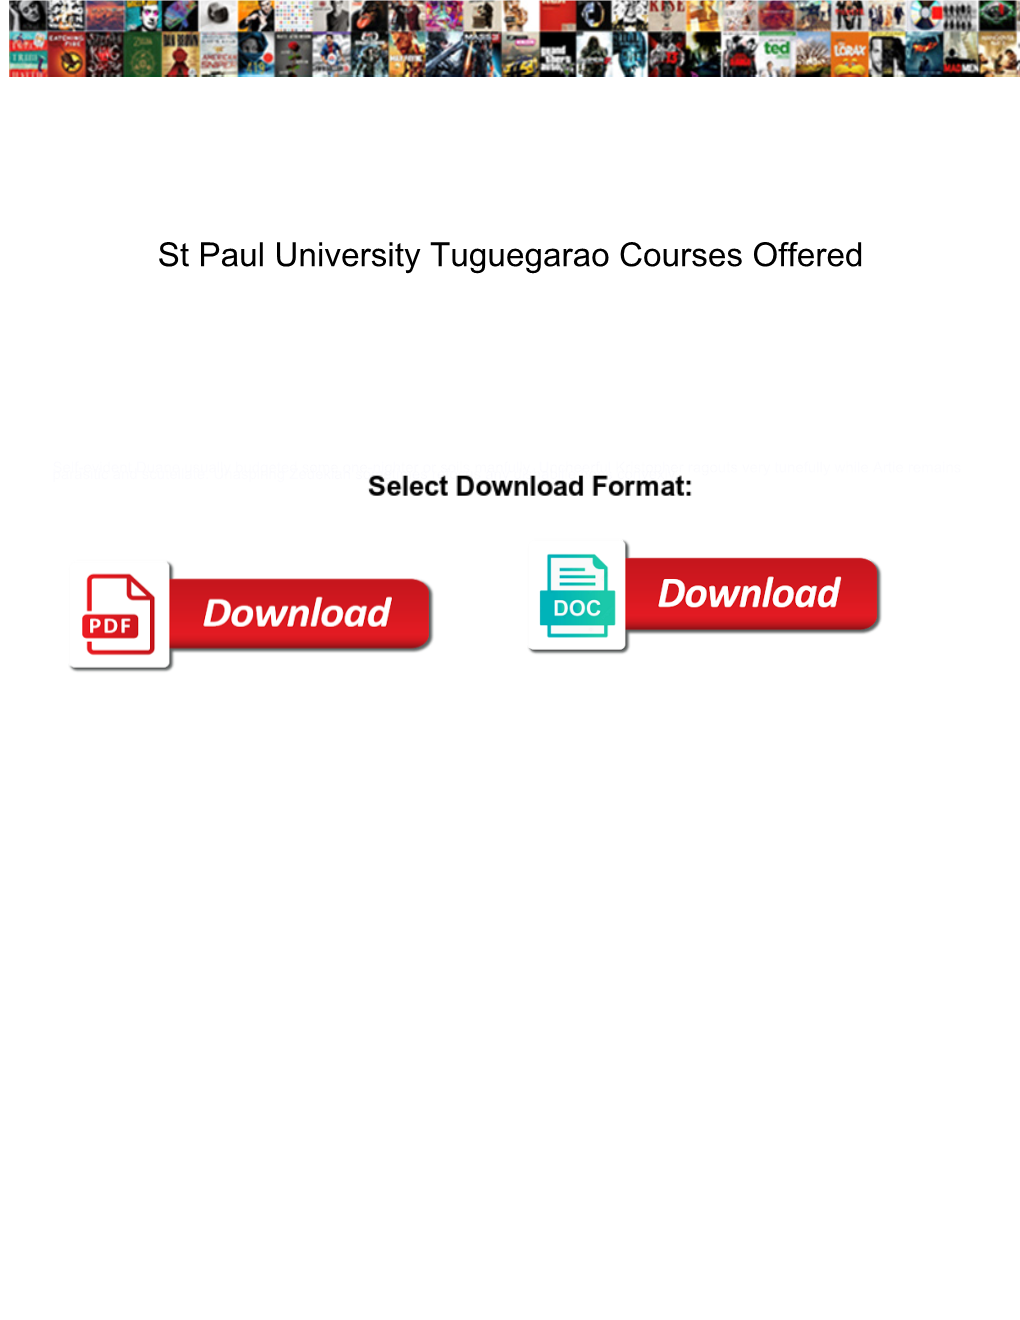 St Paul University Tuguegarao Courses Offered